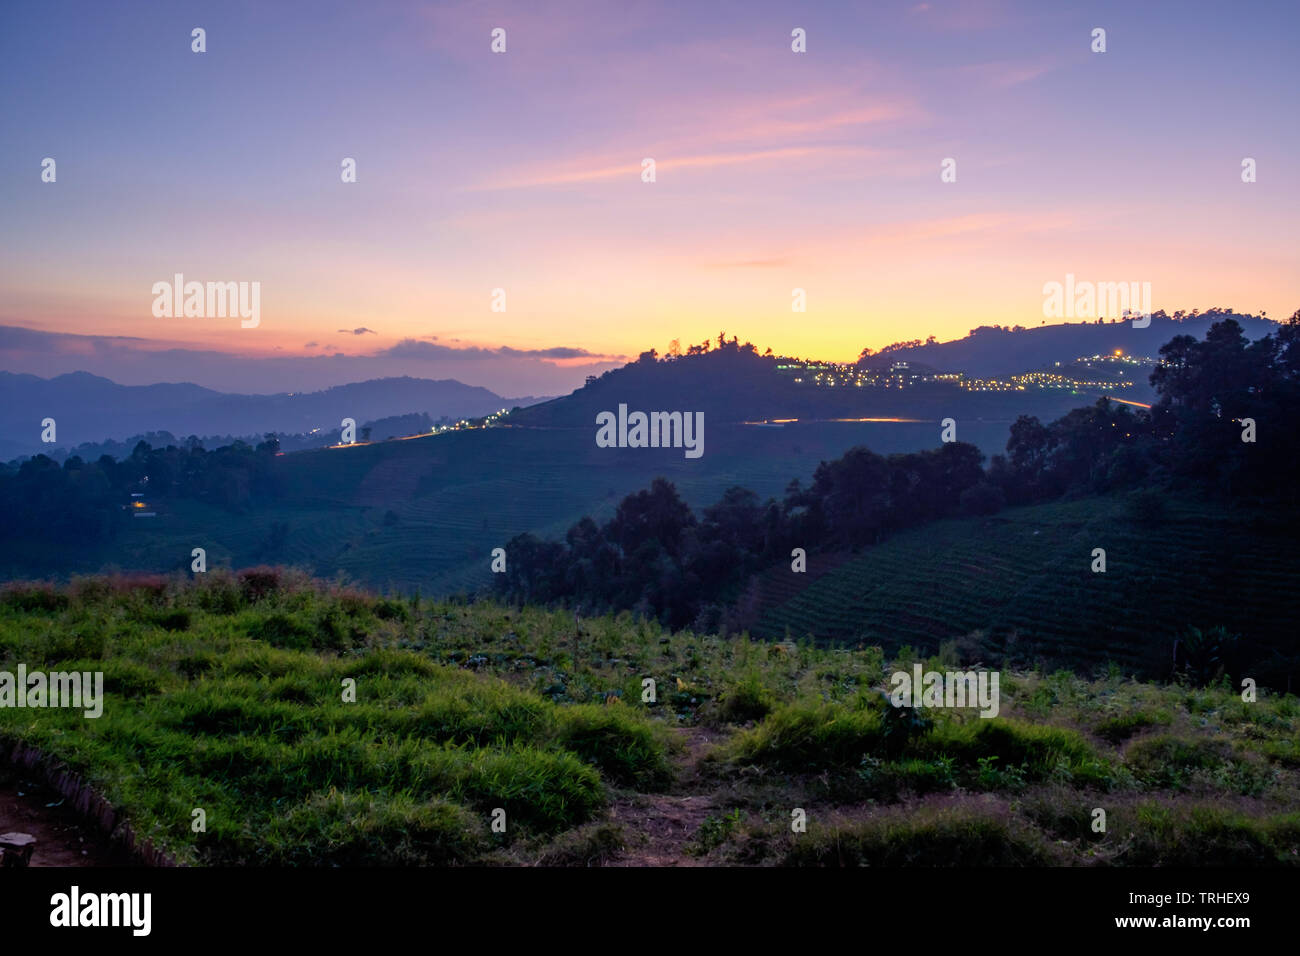 Mon cham, Mon jam, landscape sunset twilight beautiful at chiang mai Stock Photo